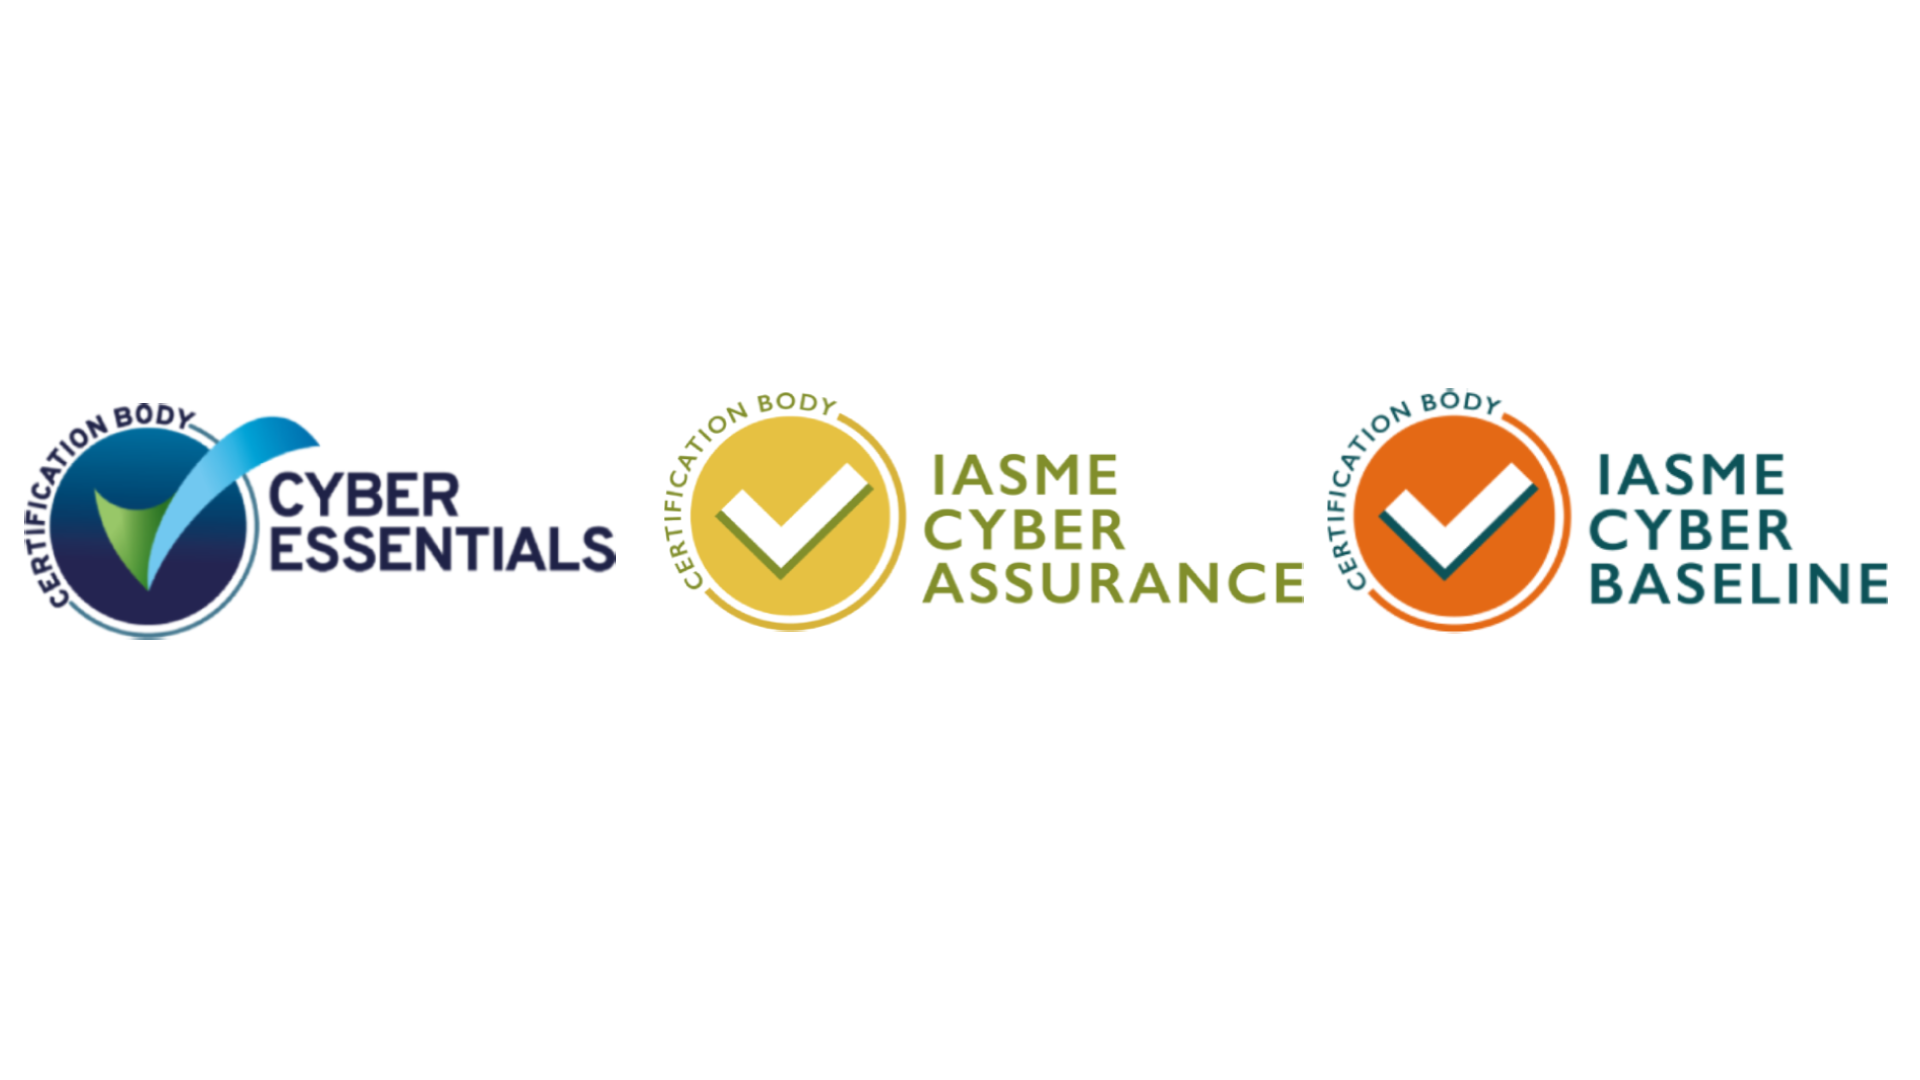 IASME Cyber Assurance IASME Cyber Essentials IASME Cyber Baseline